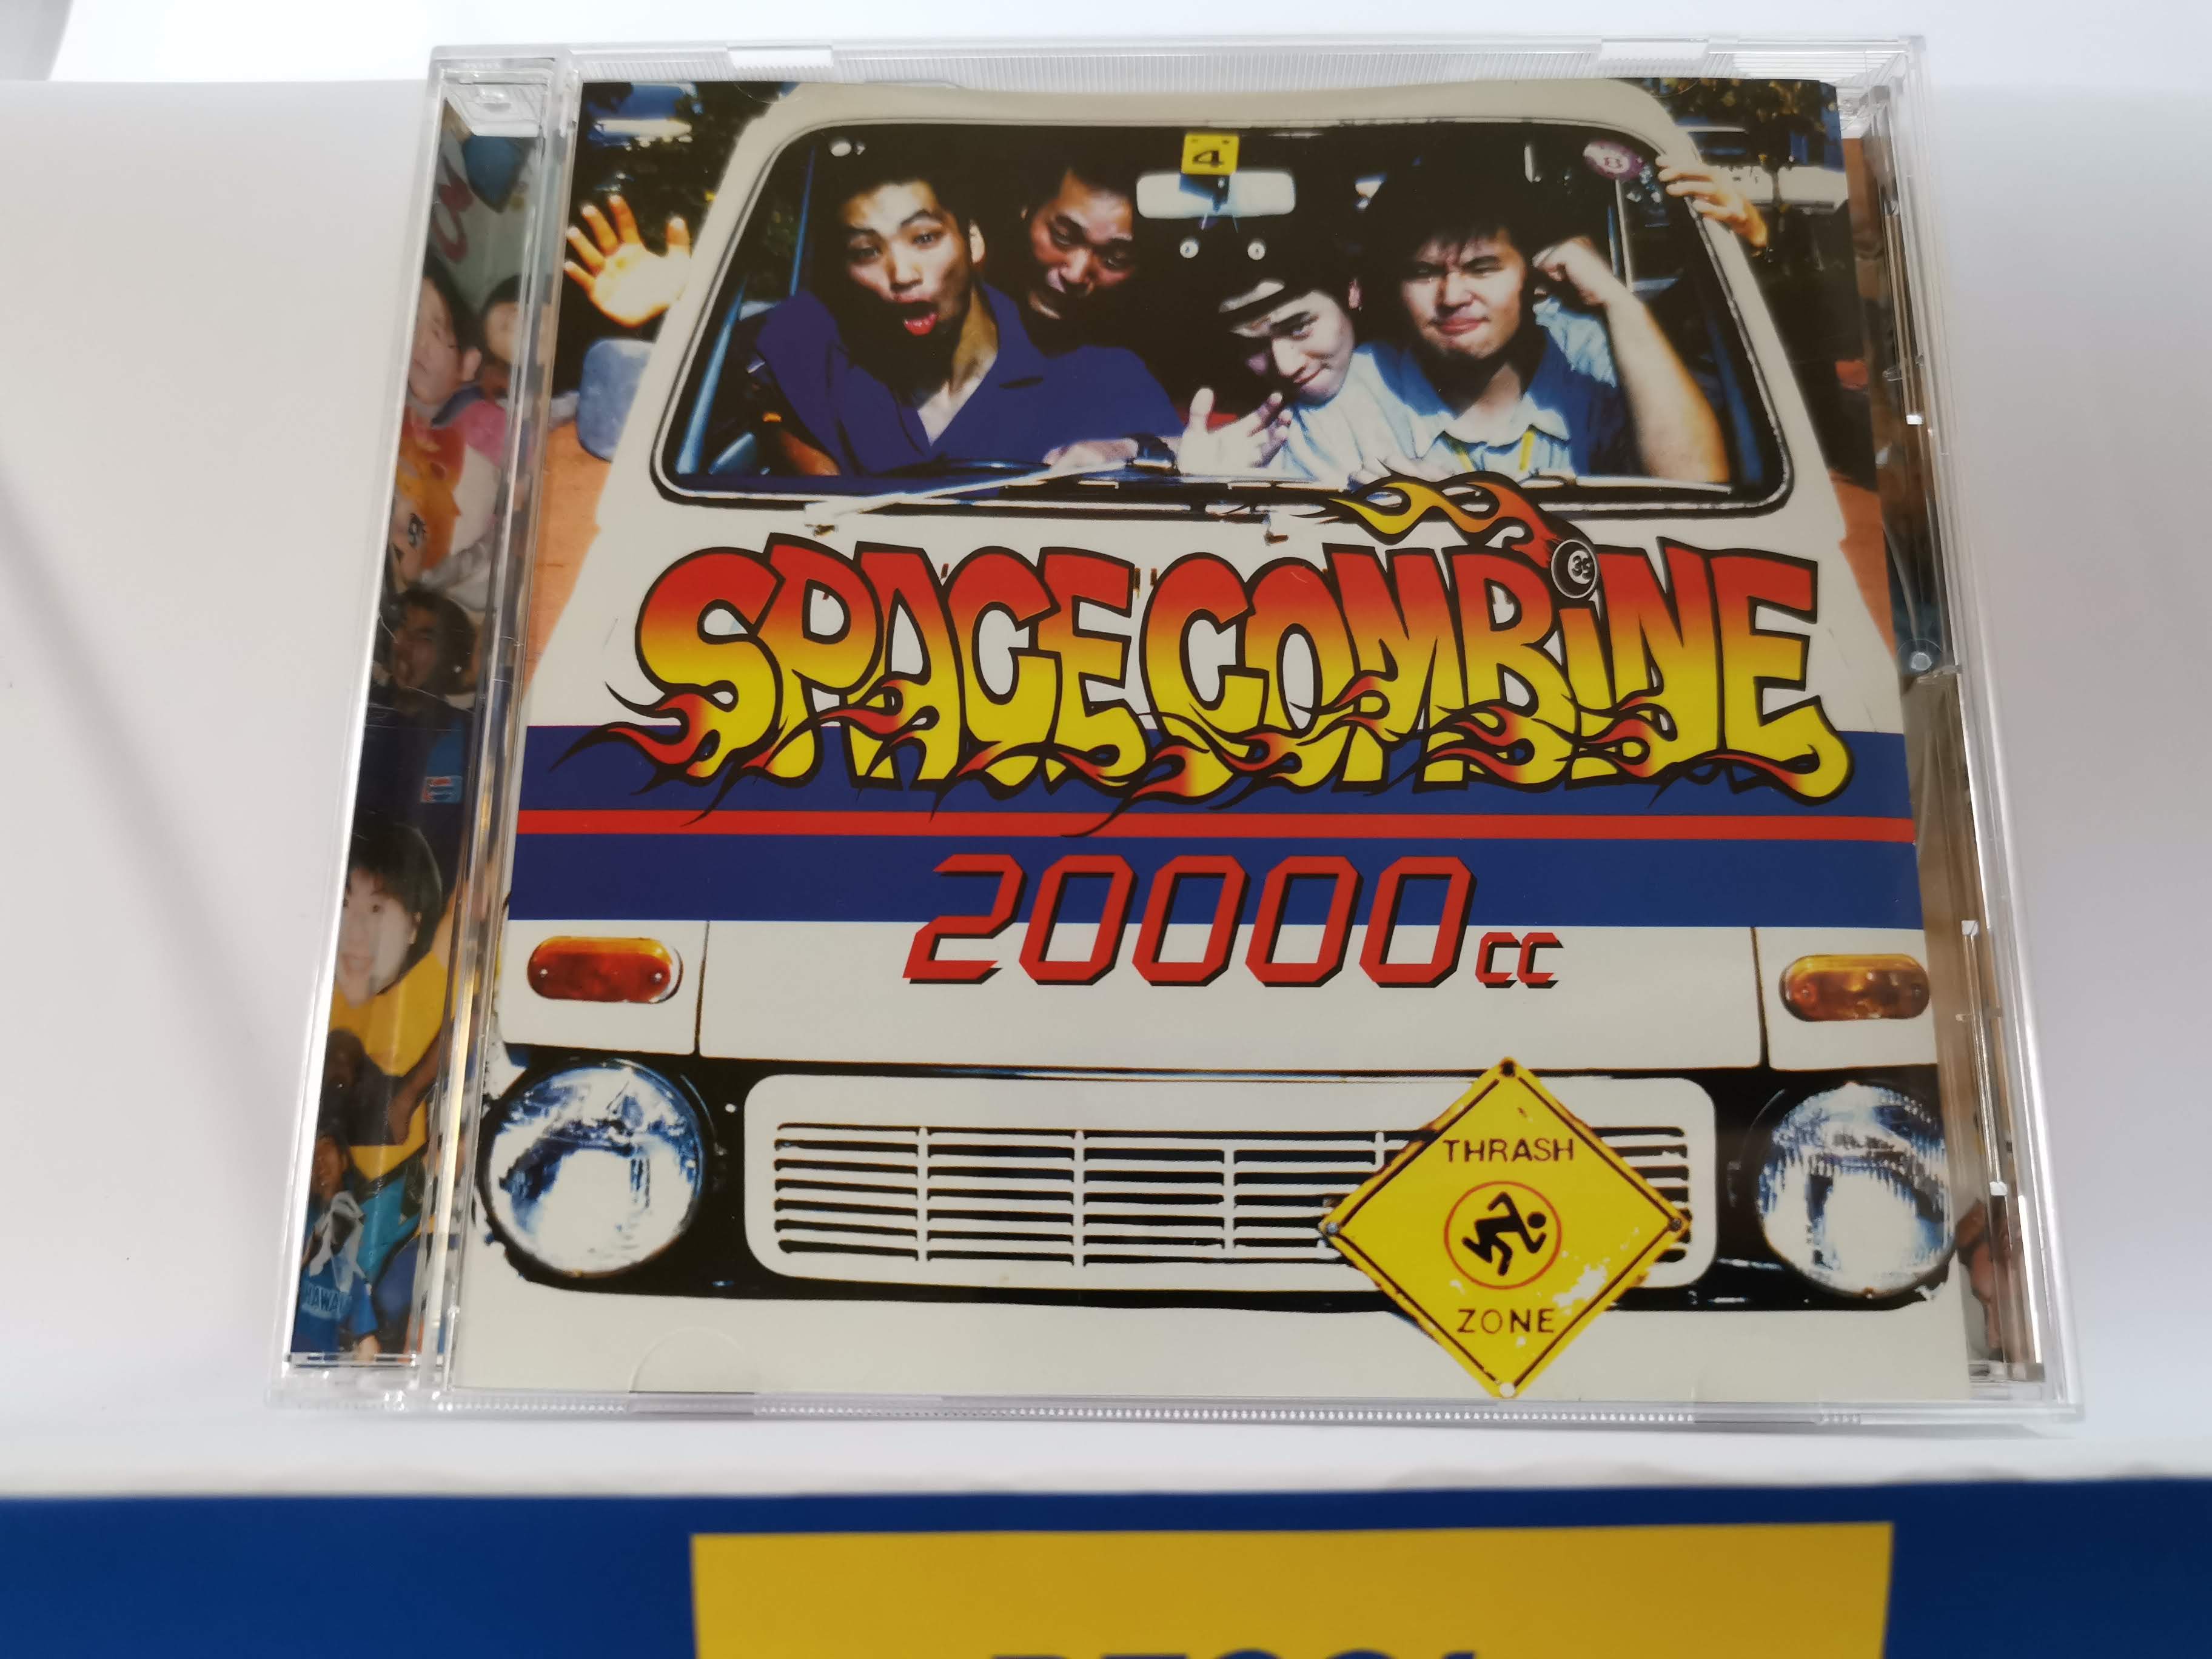 Space Combine / 20000cc